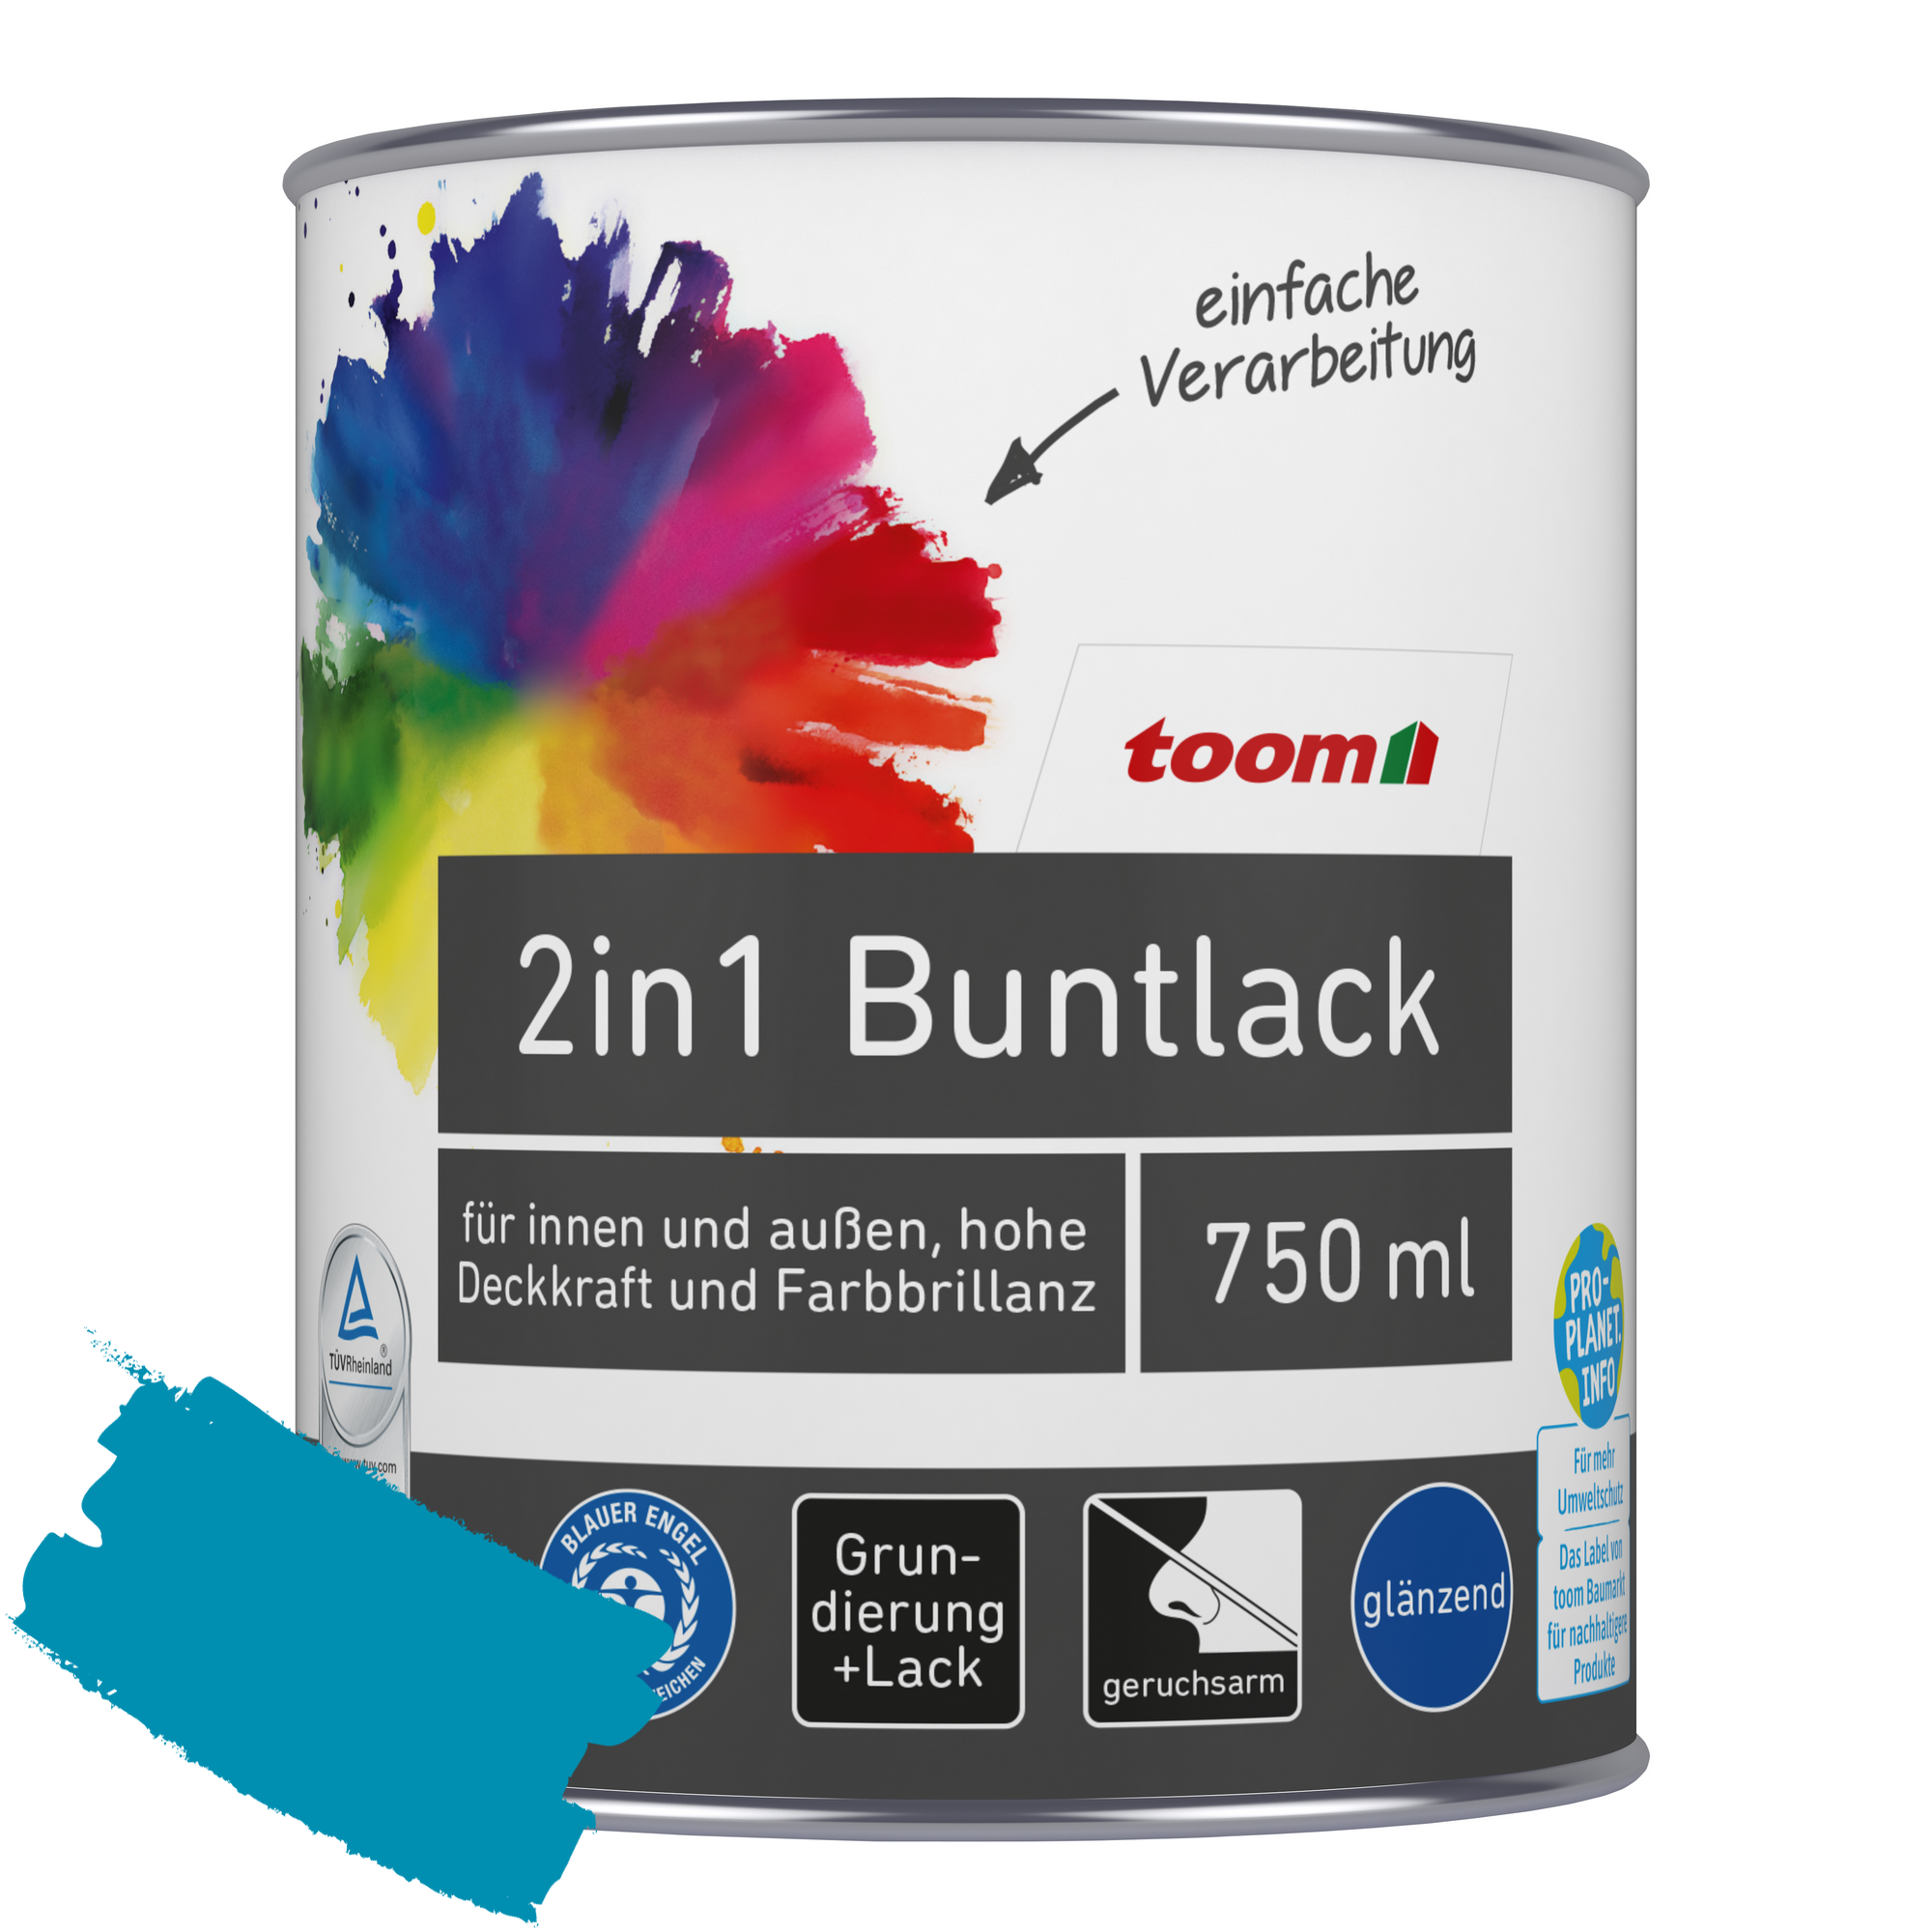 2in1 Buntlack 'Aquamarine' lichtblau glänzend 750 ml + product picture